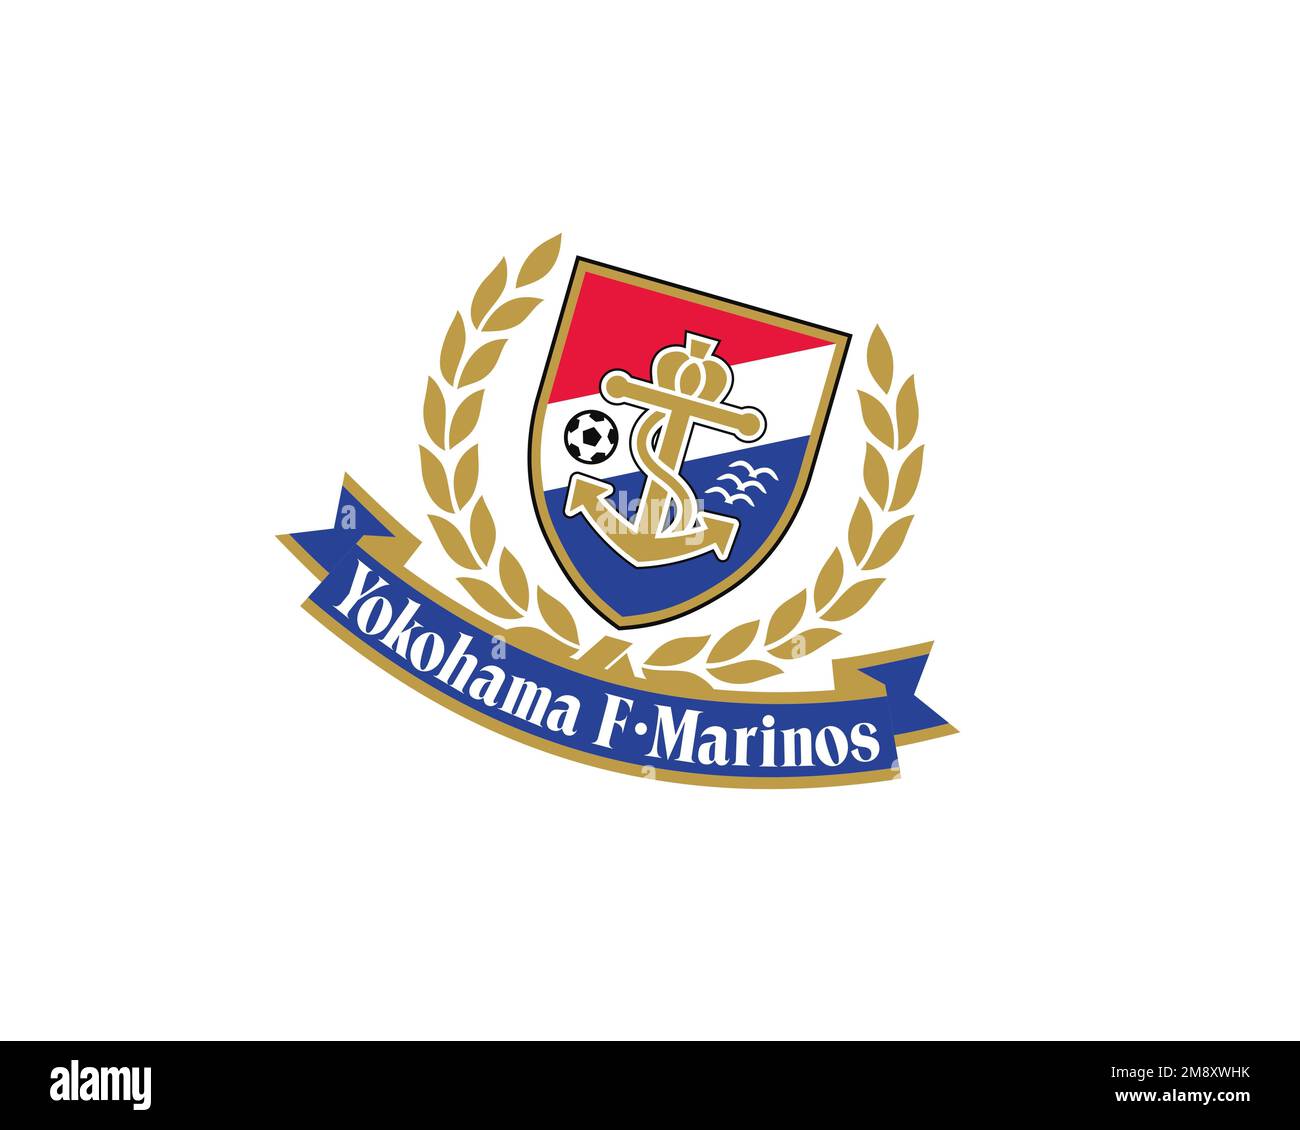 Yokohama F. Marinos, rotated logo, white background B Stock Photo